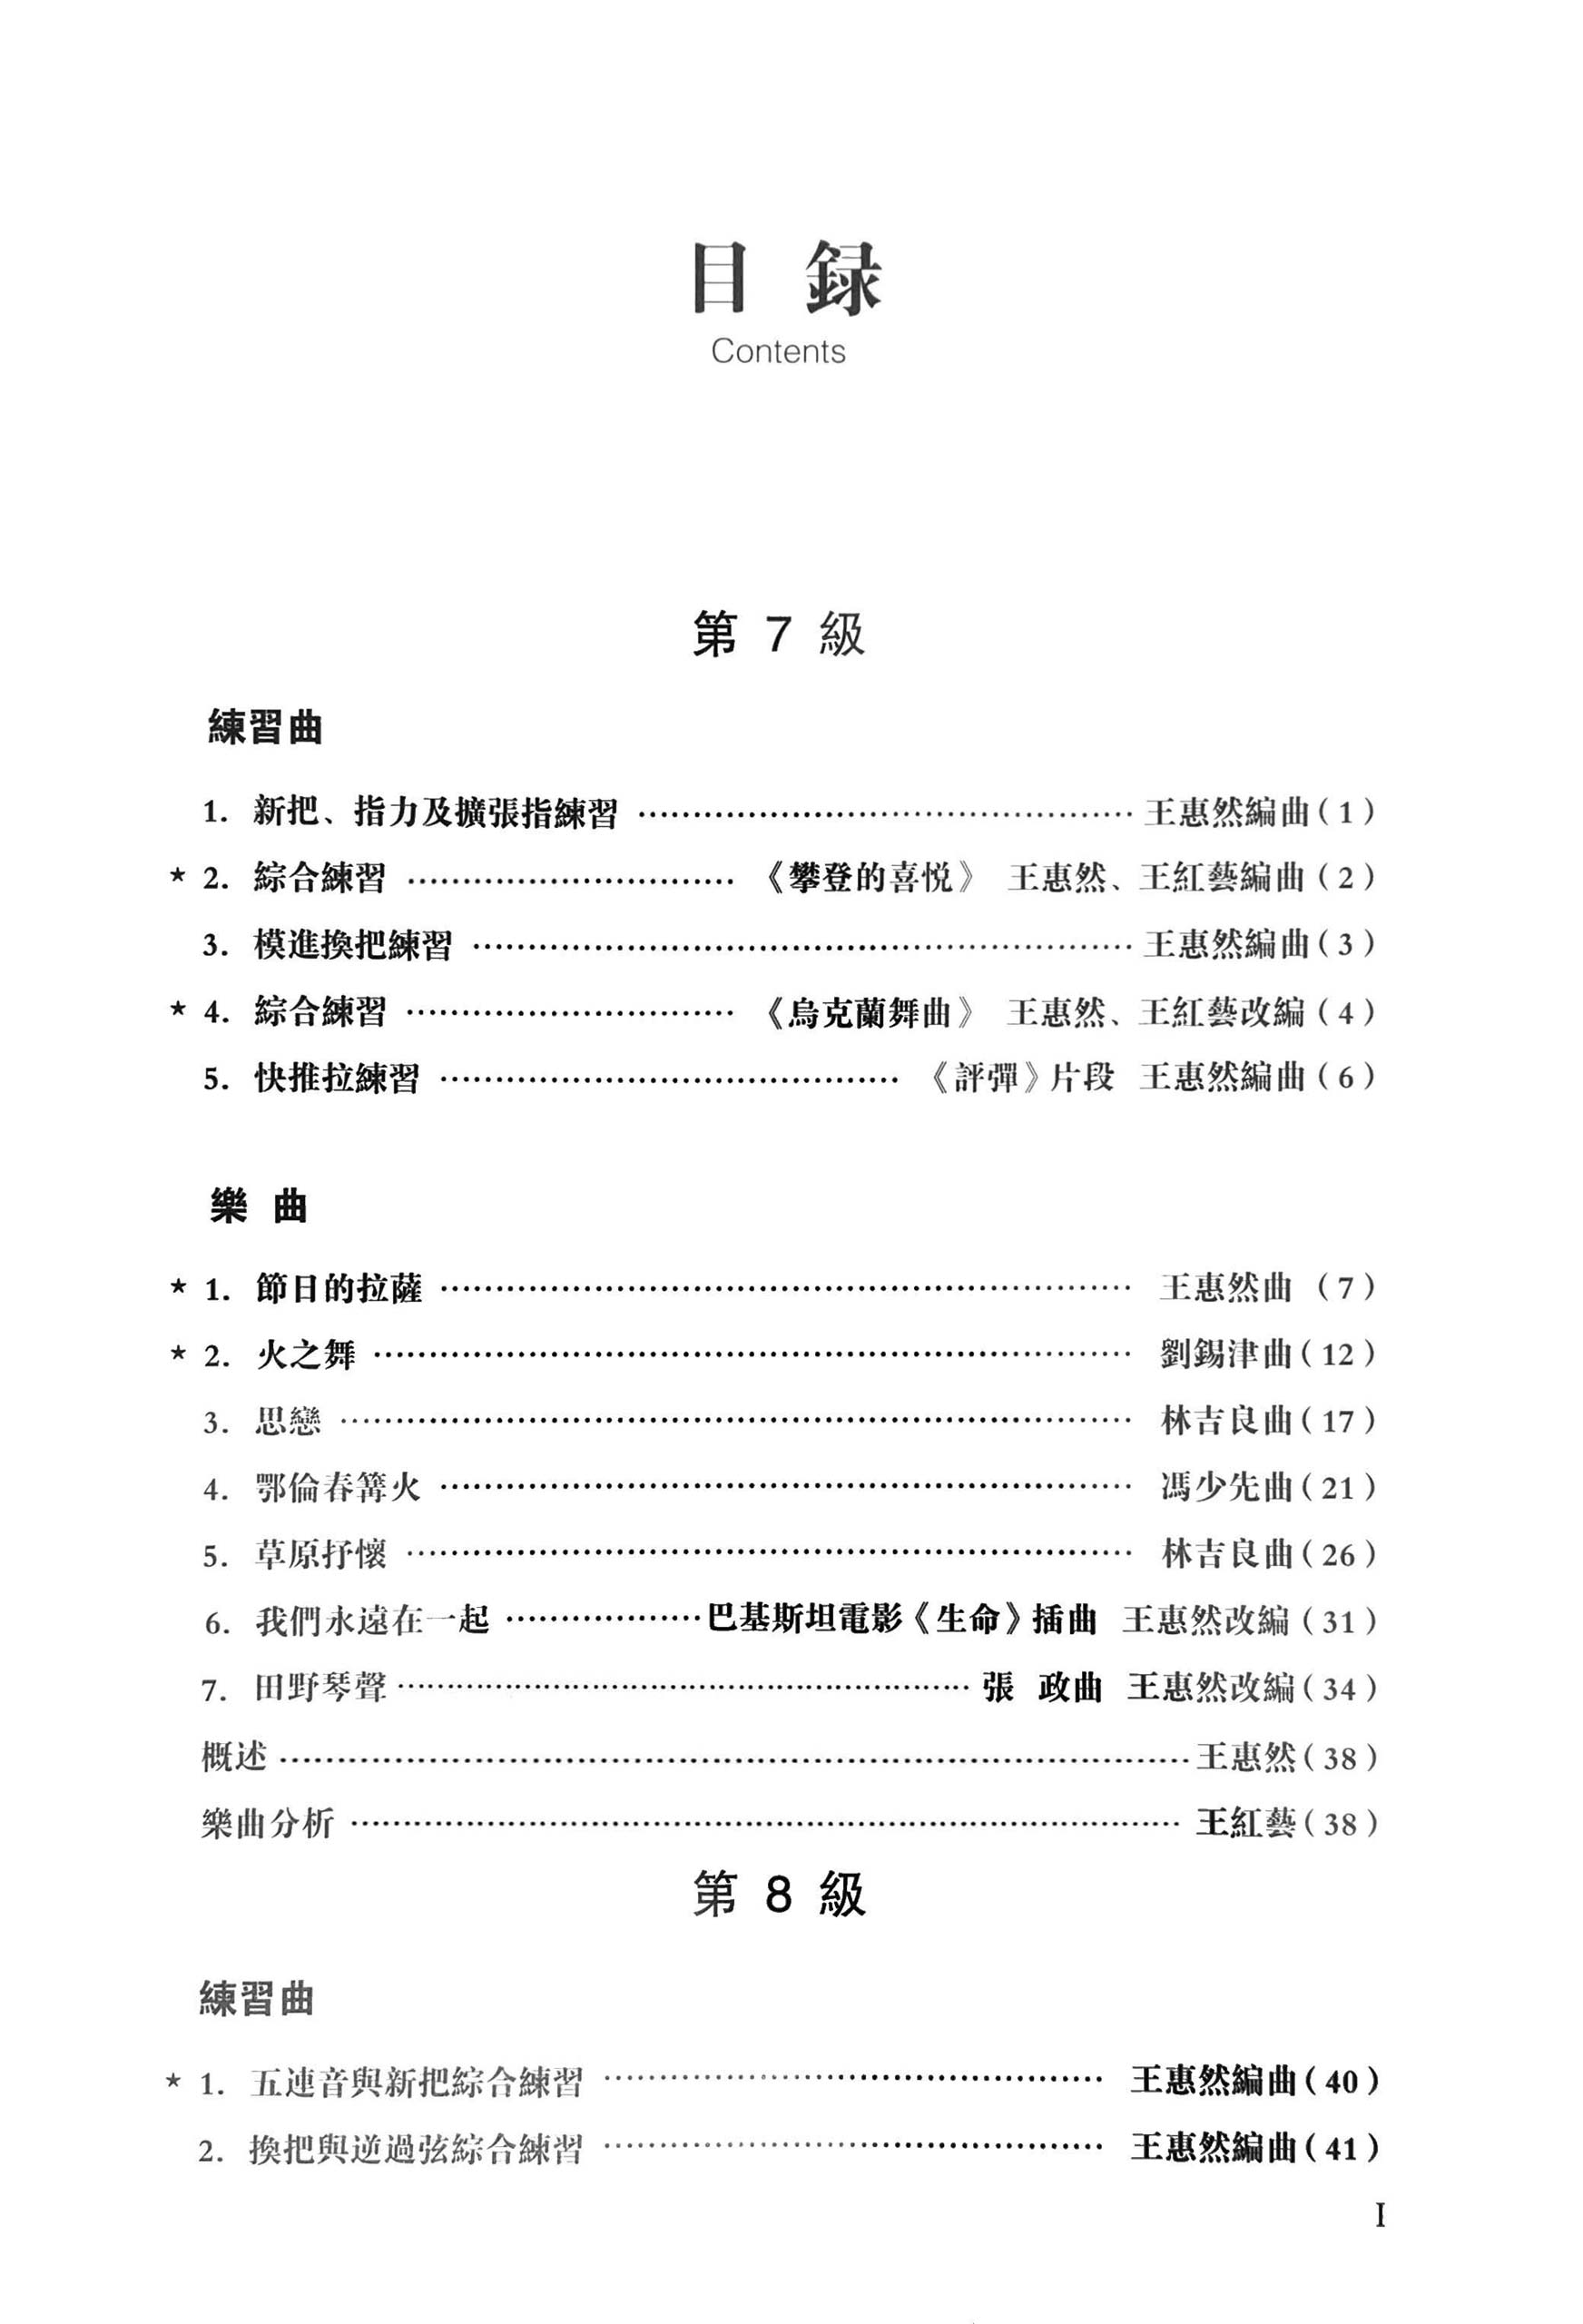 Liuqin Grading Examination Book by CCOM – NAFA (Beginner Grade 7-9) Content Page 1